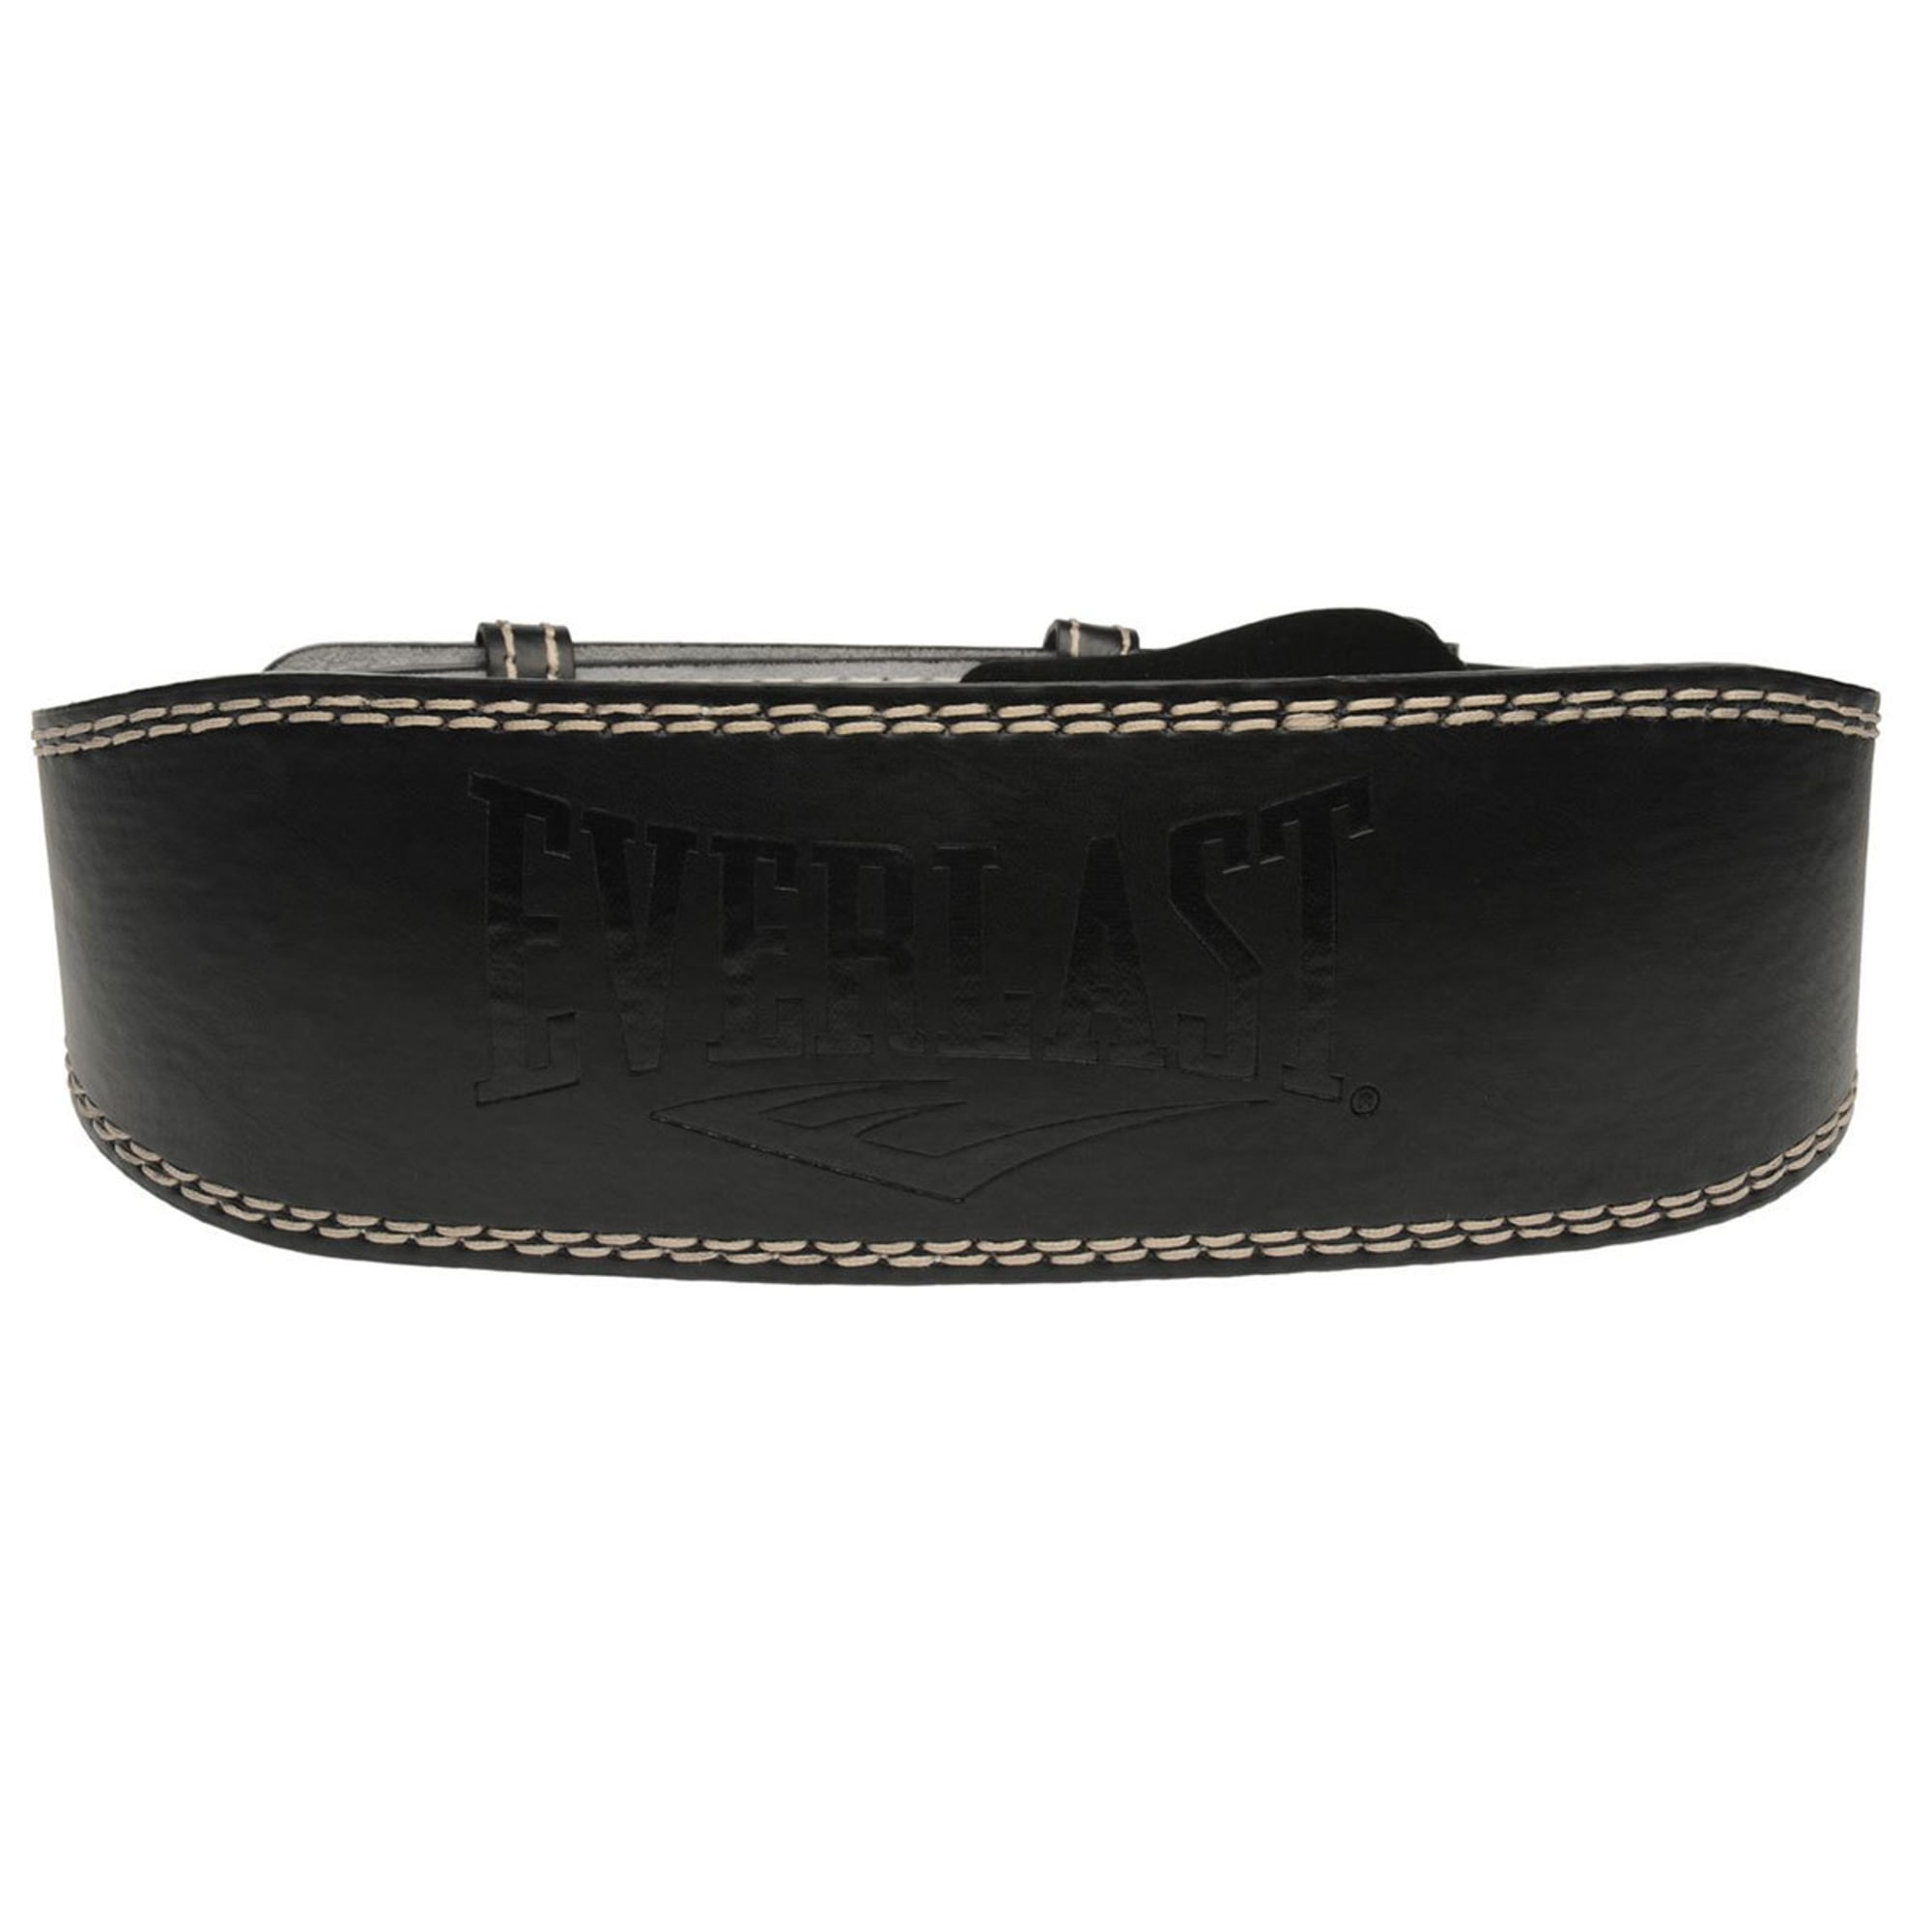 Everlast Leather Weight Lifting Belt Size Large Model #1012 MADE